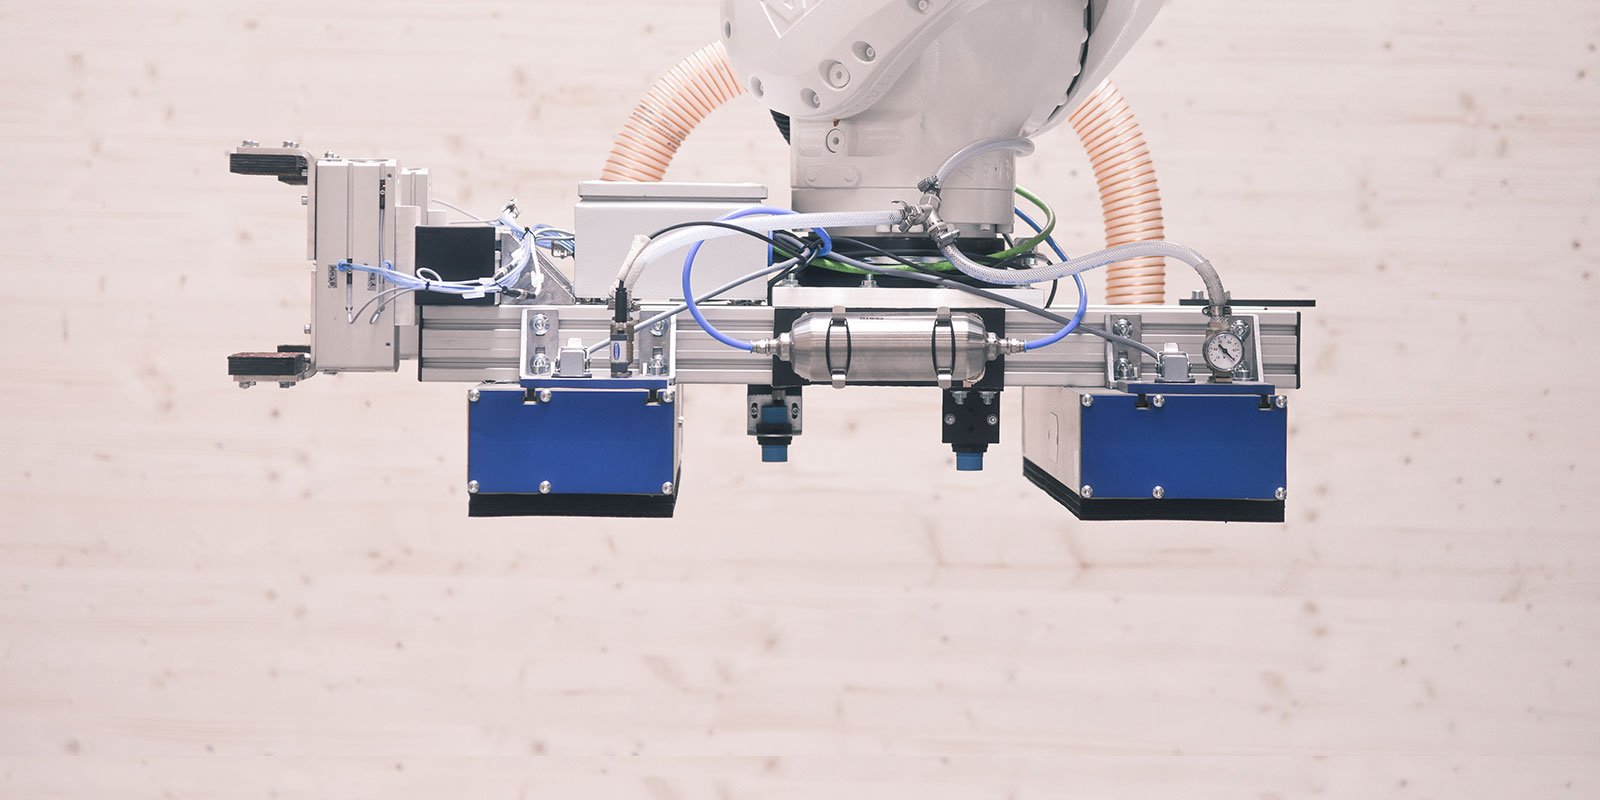 BEC ROBOTICS - KUKA - Production Automation - Industrial Robotics - Mobile Robotics - Efficiency - Productivity - Material Transport - Process Optimization - Worker Empowerment